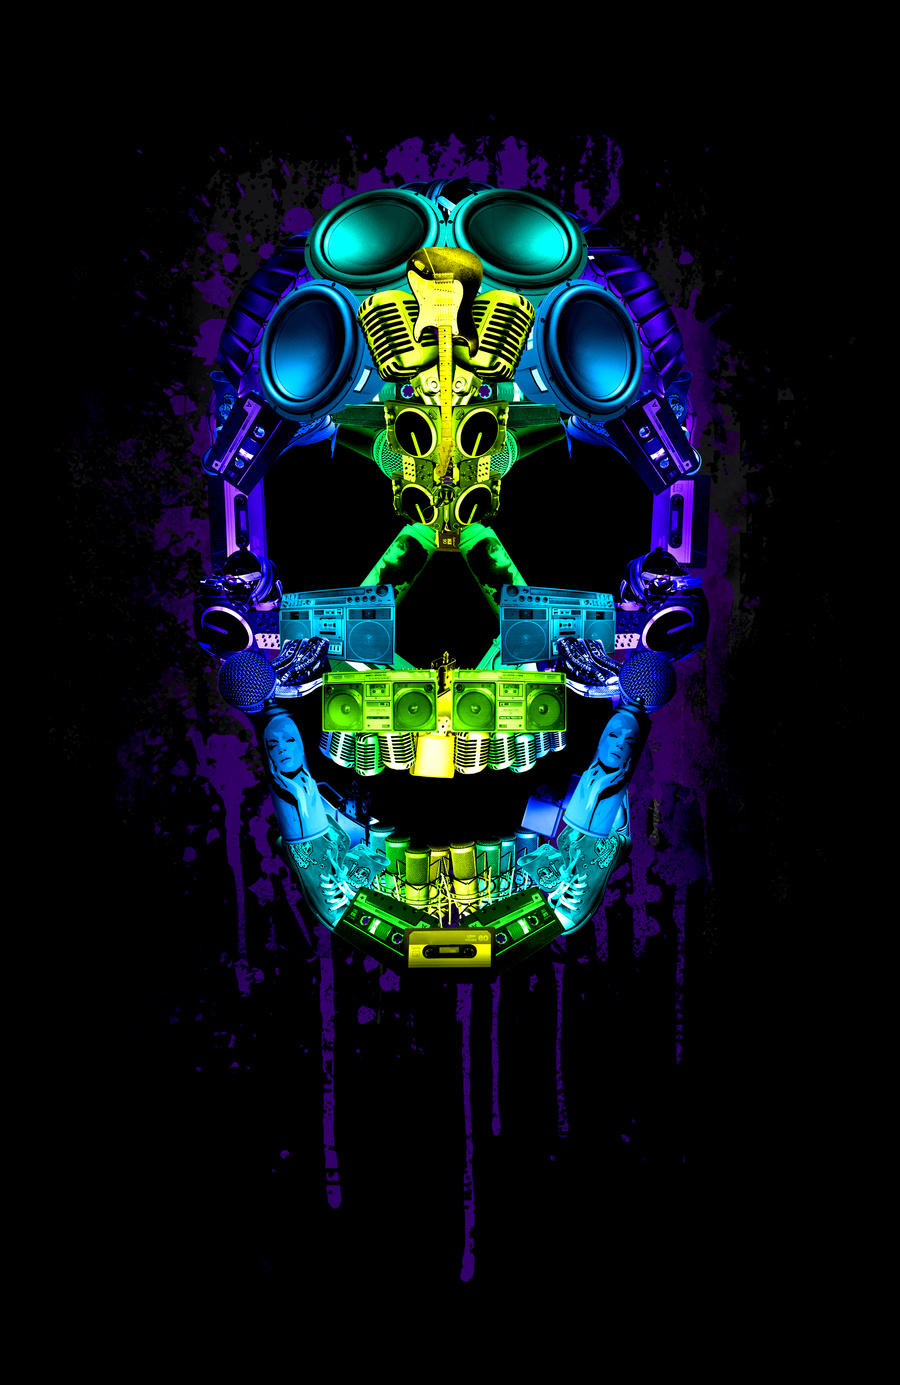 Skull Collage - Graphic Design Inspiration